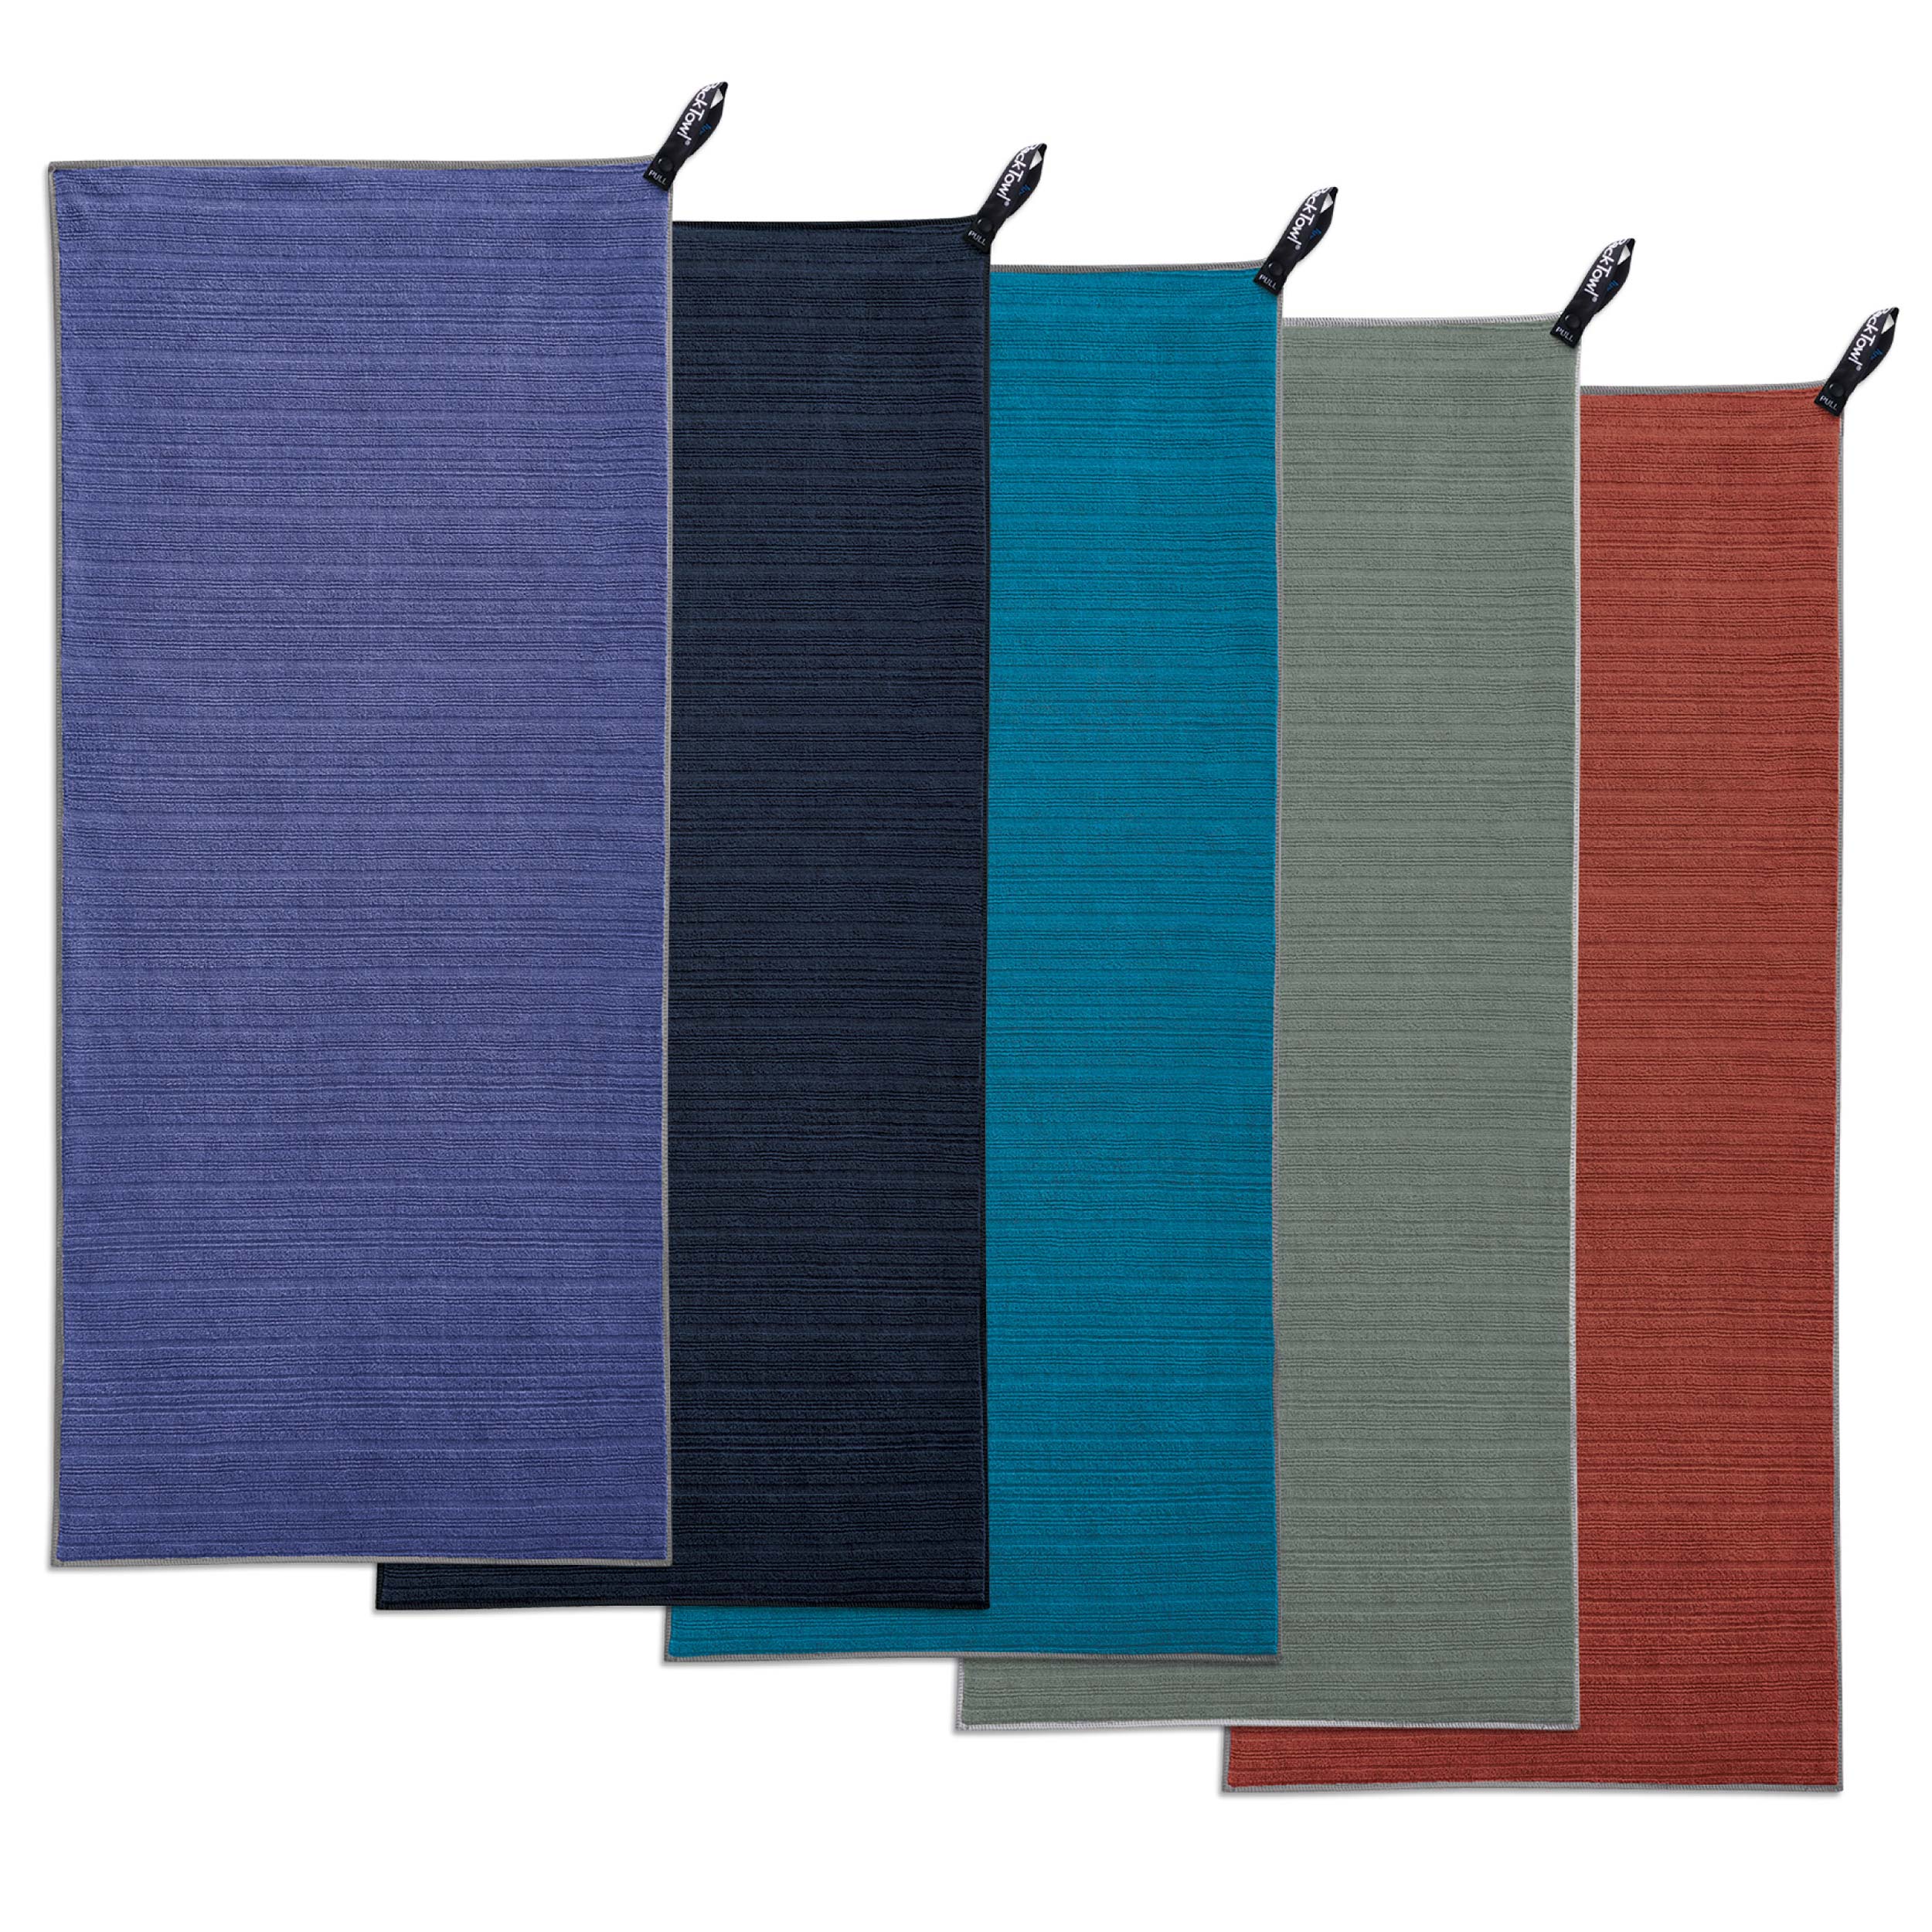 Luxe PackTowl | Soft, Absorbent, Microfiber Towel | PackTowl®